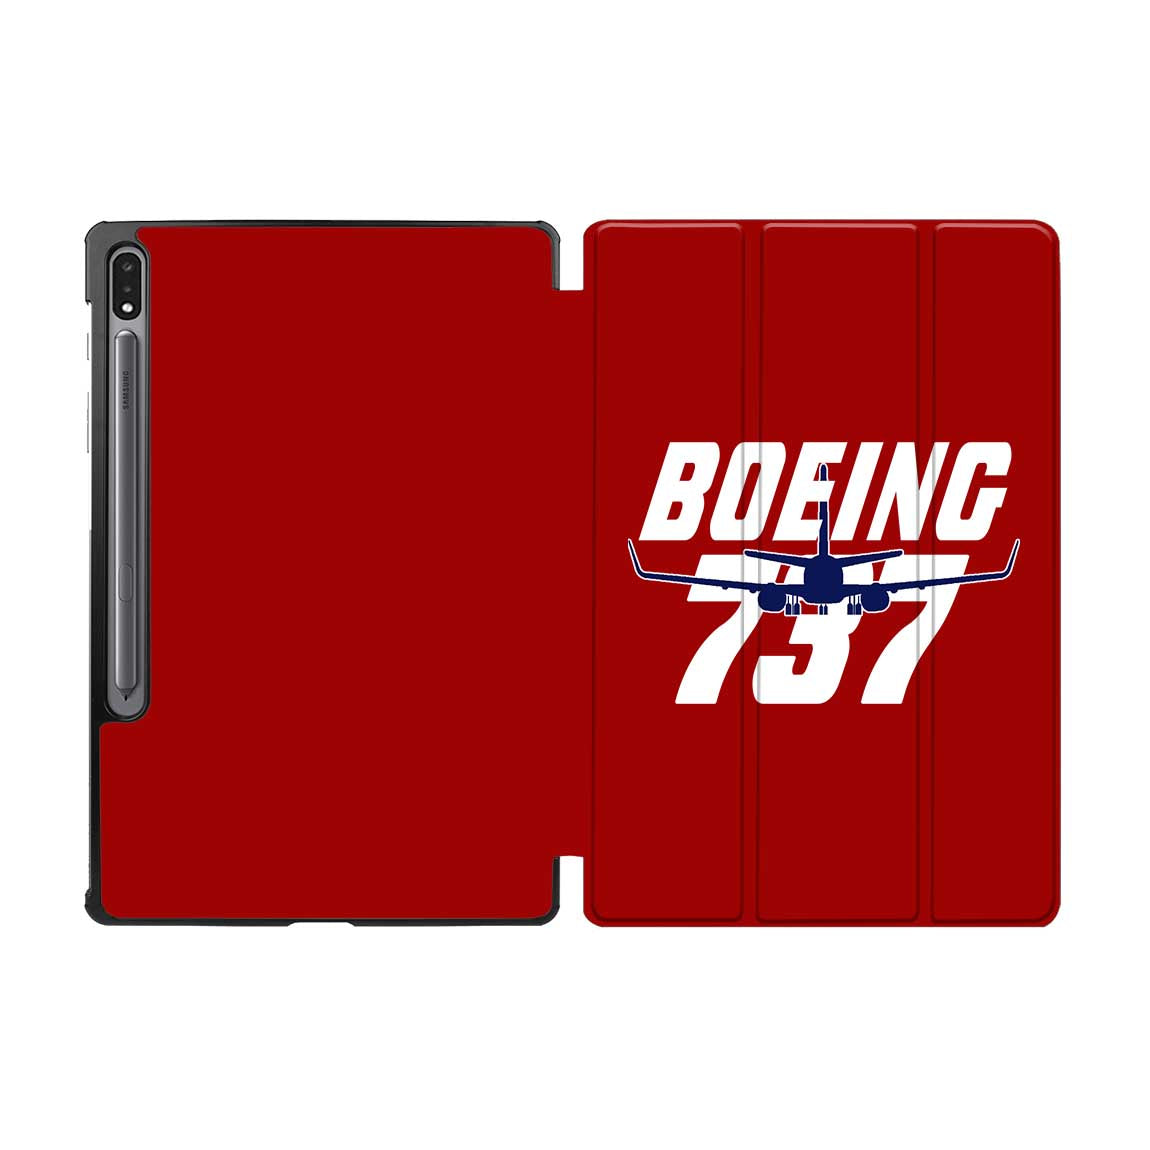 Amazing Boeing 737 Designed Samsung Tablet Cases